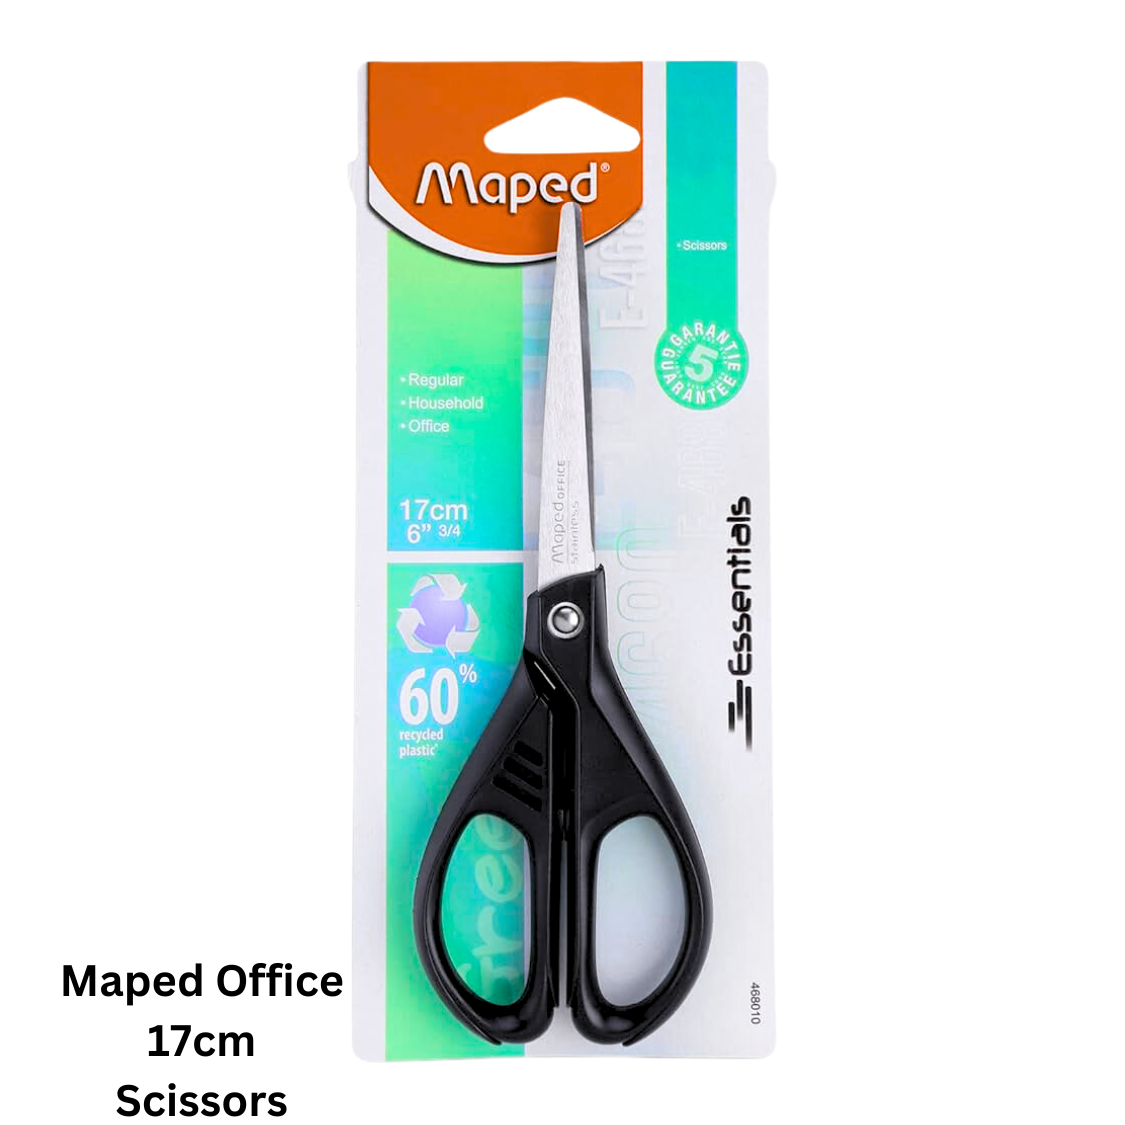 Buy online Maped Office 17cm Scissors In Qatar